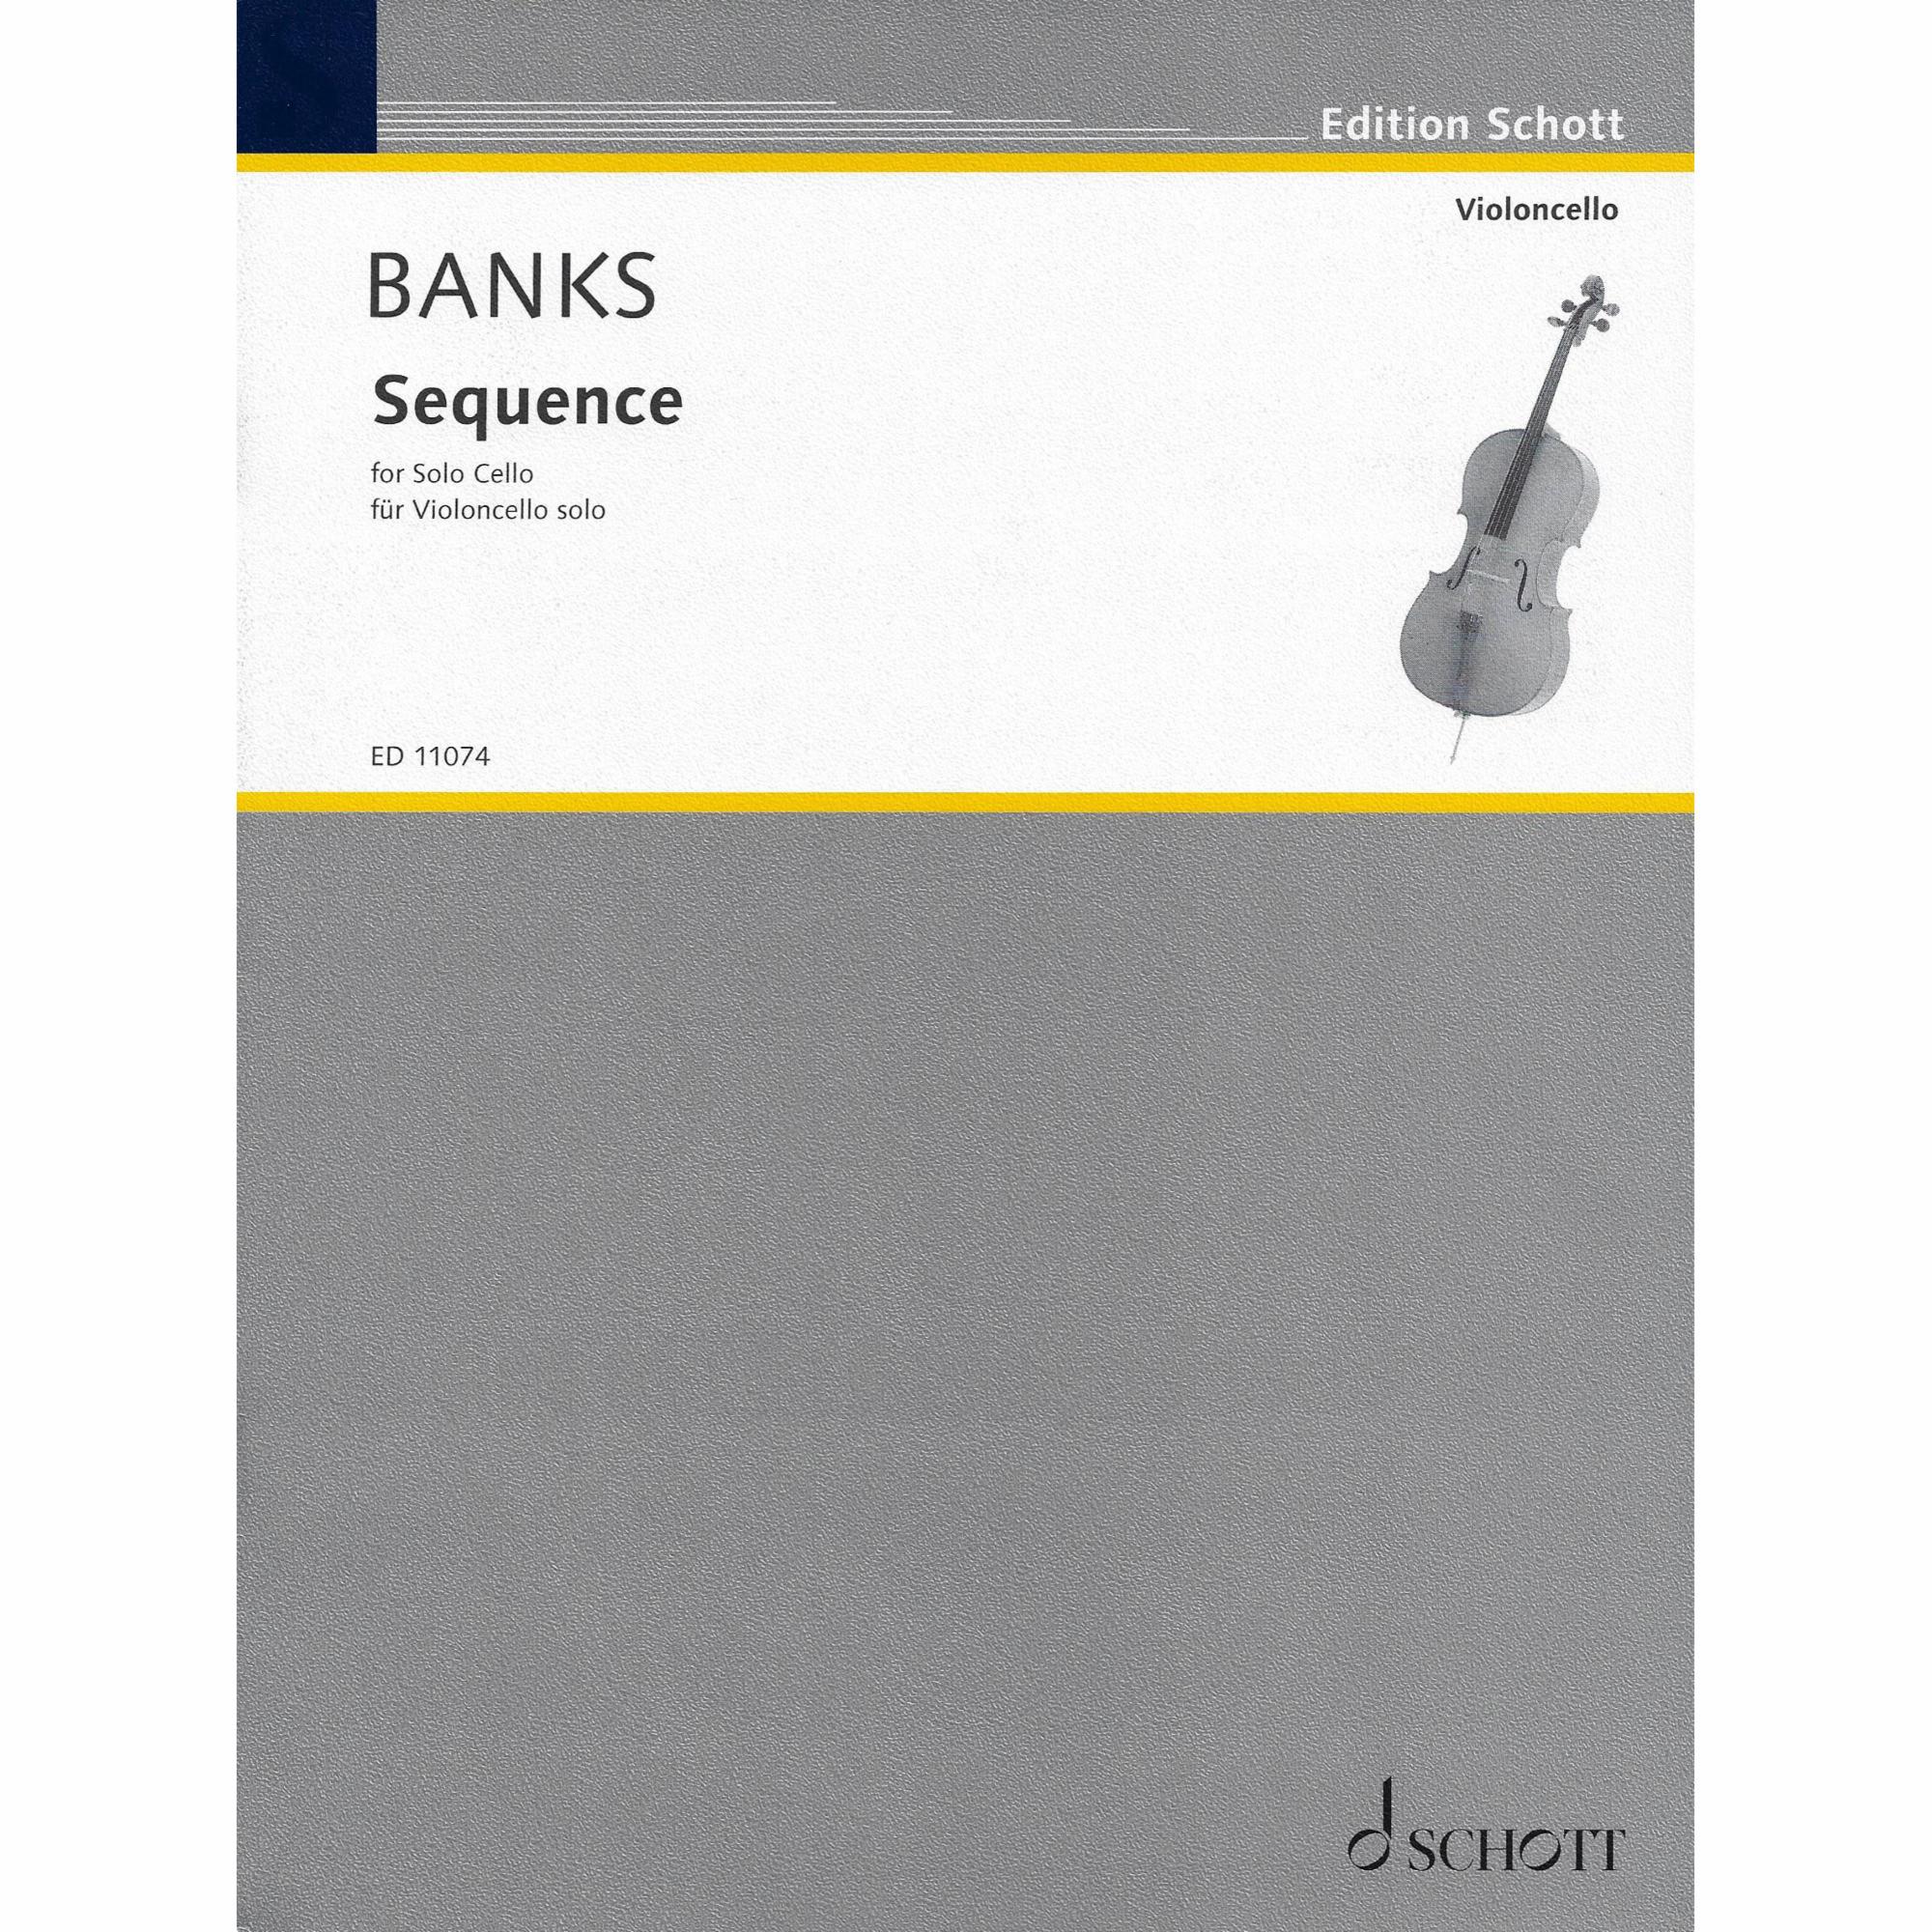 Banks -- Sequence for Solo Cello